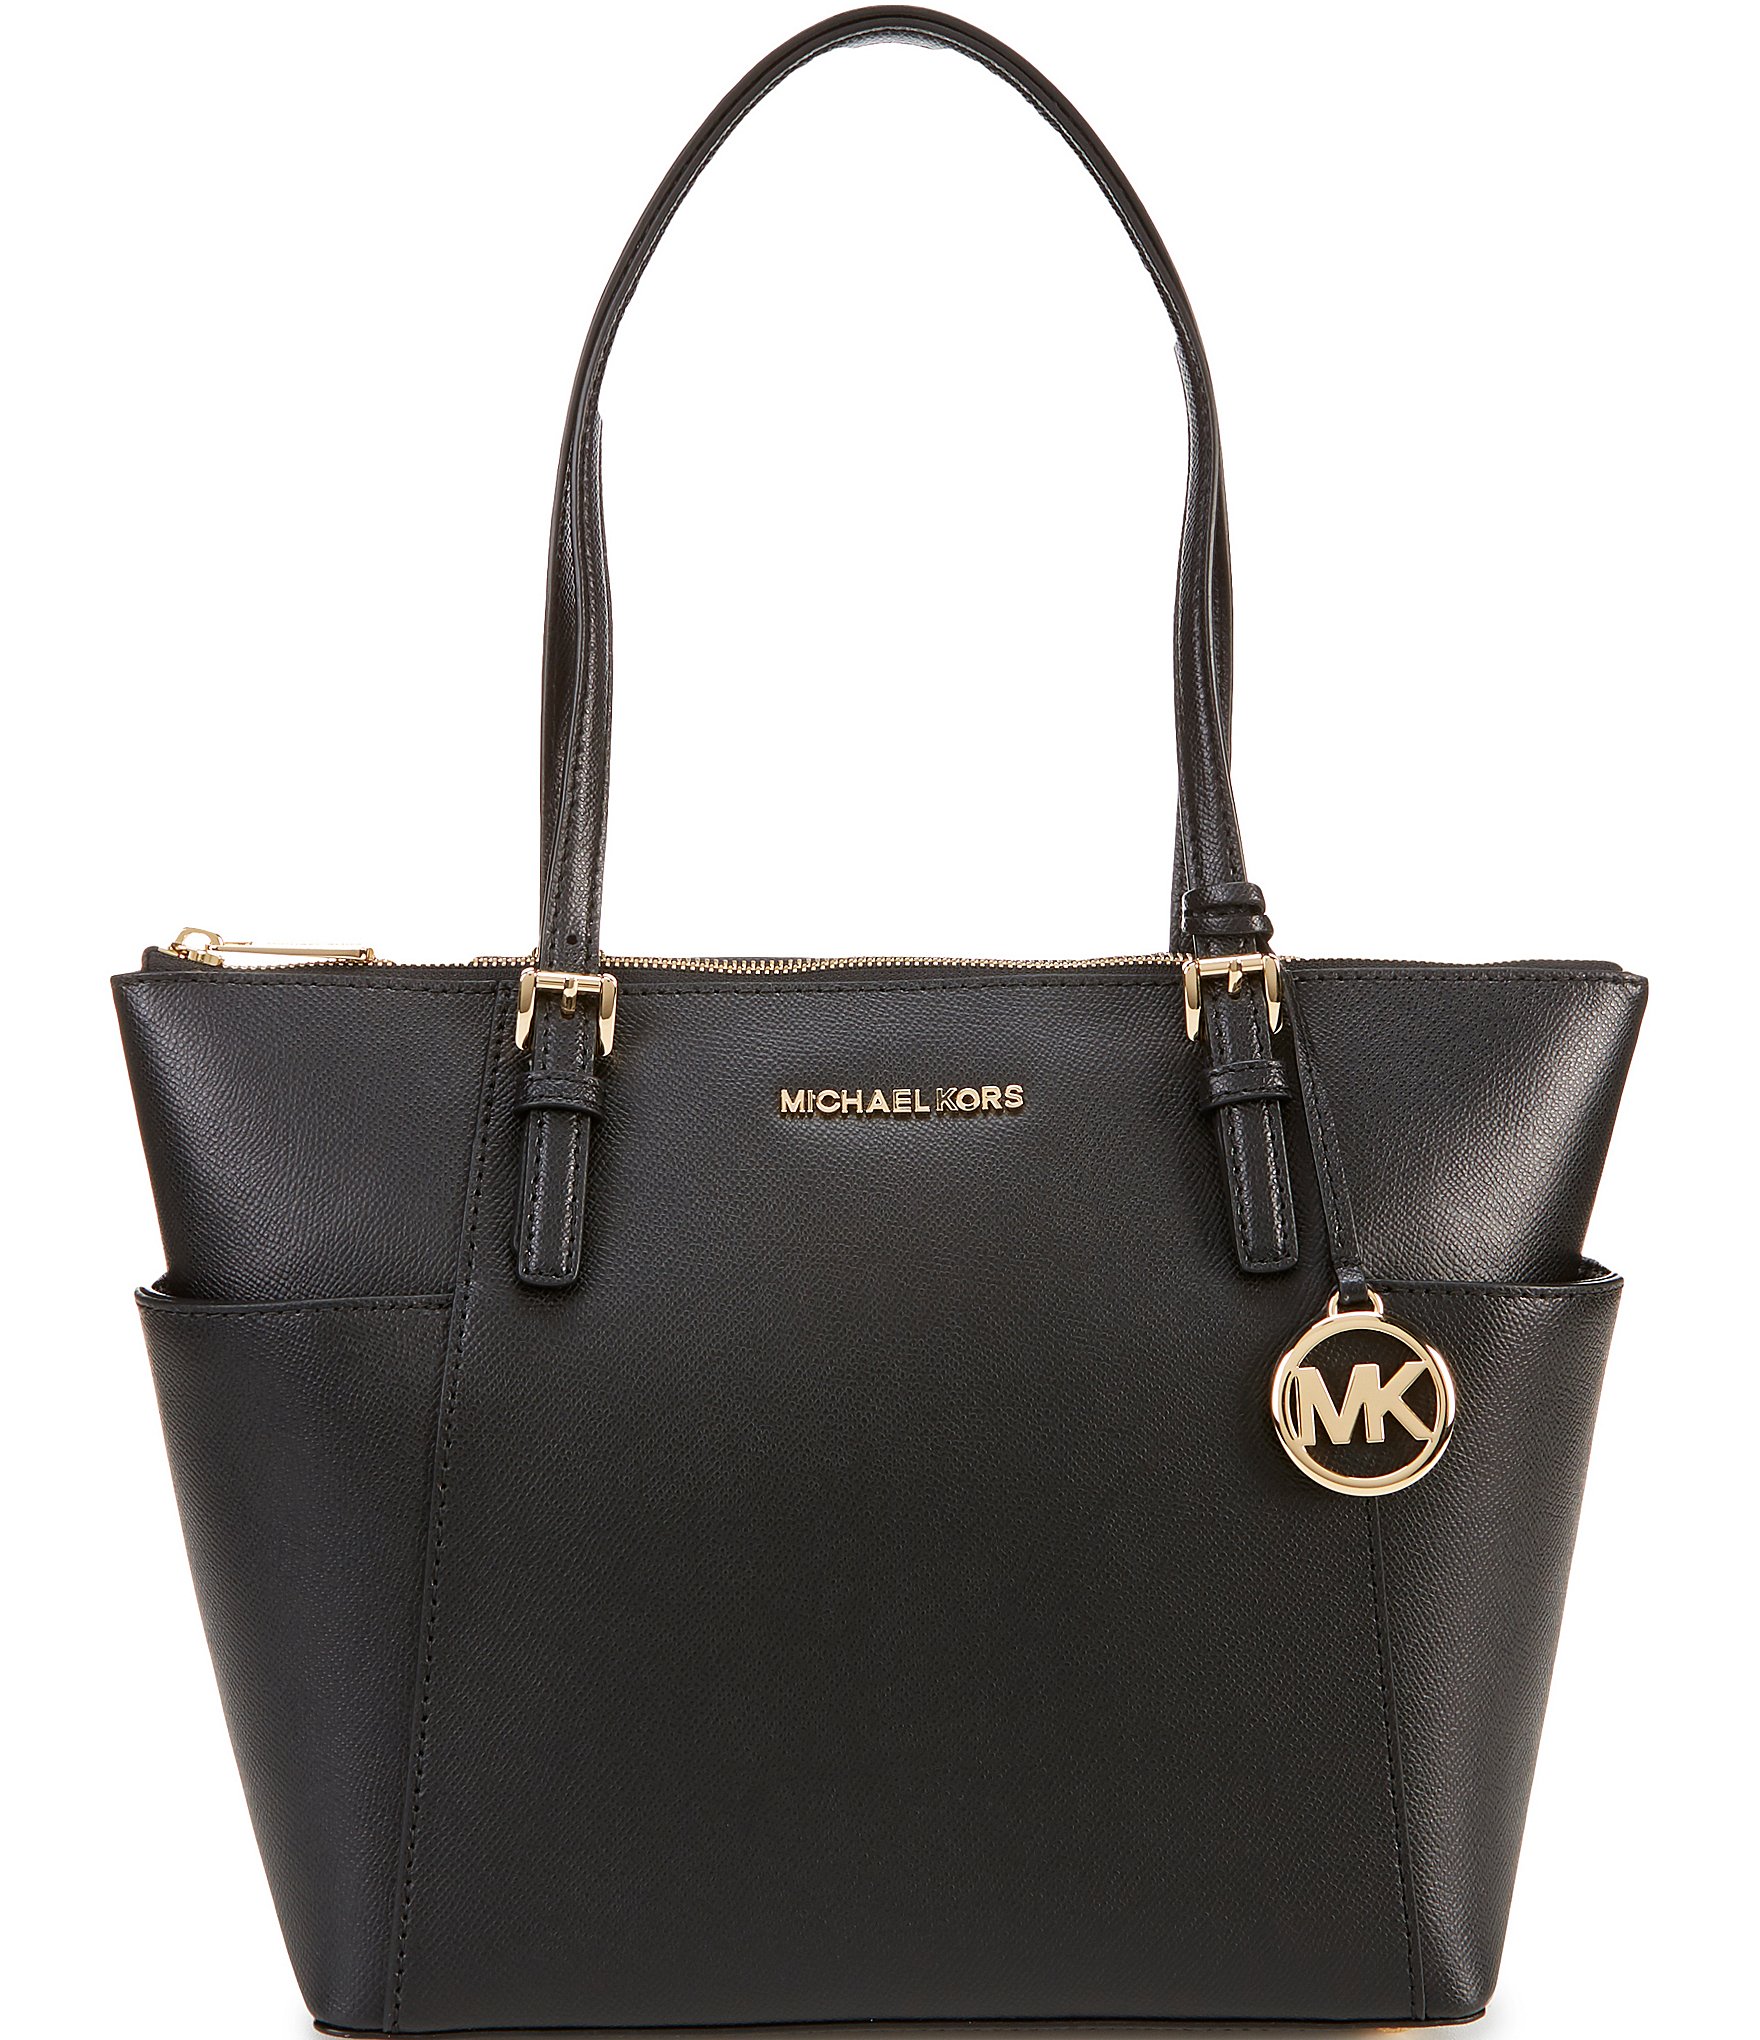 mk purses black